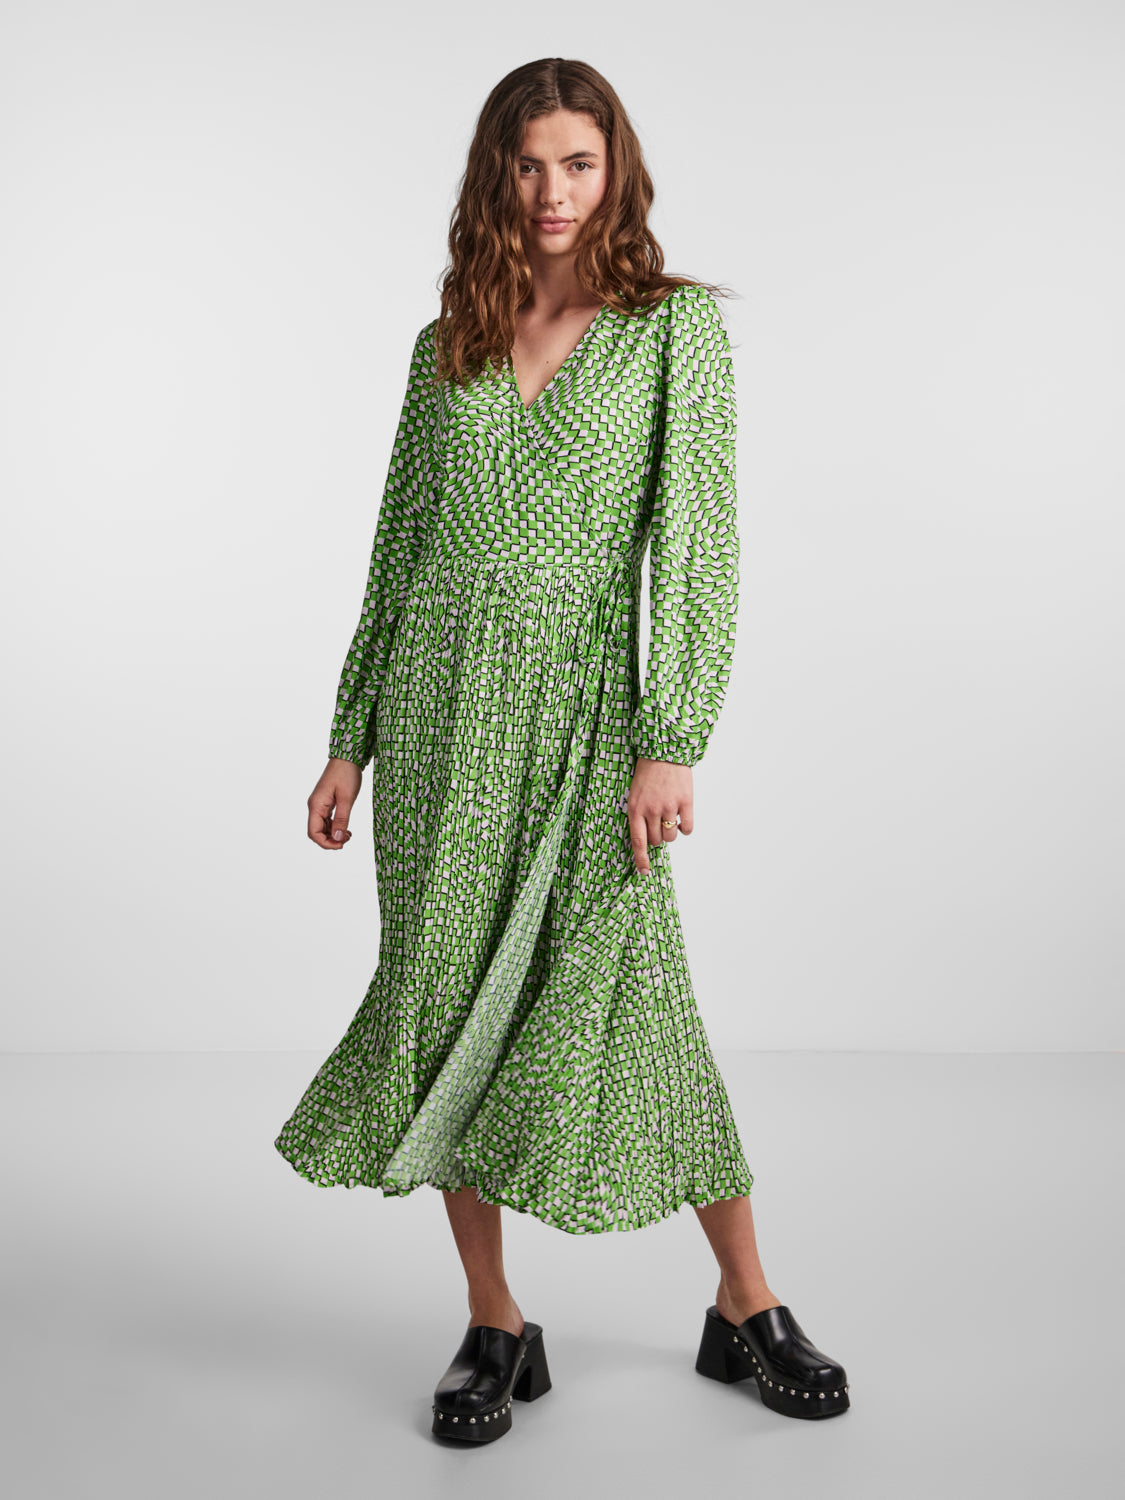 YASSTEPS Dress - Classic Green